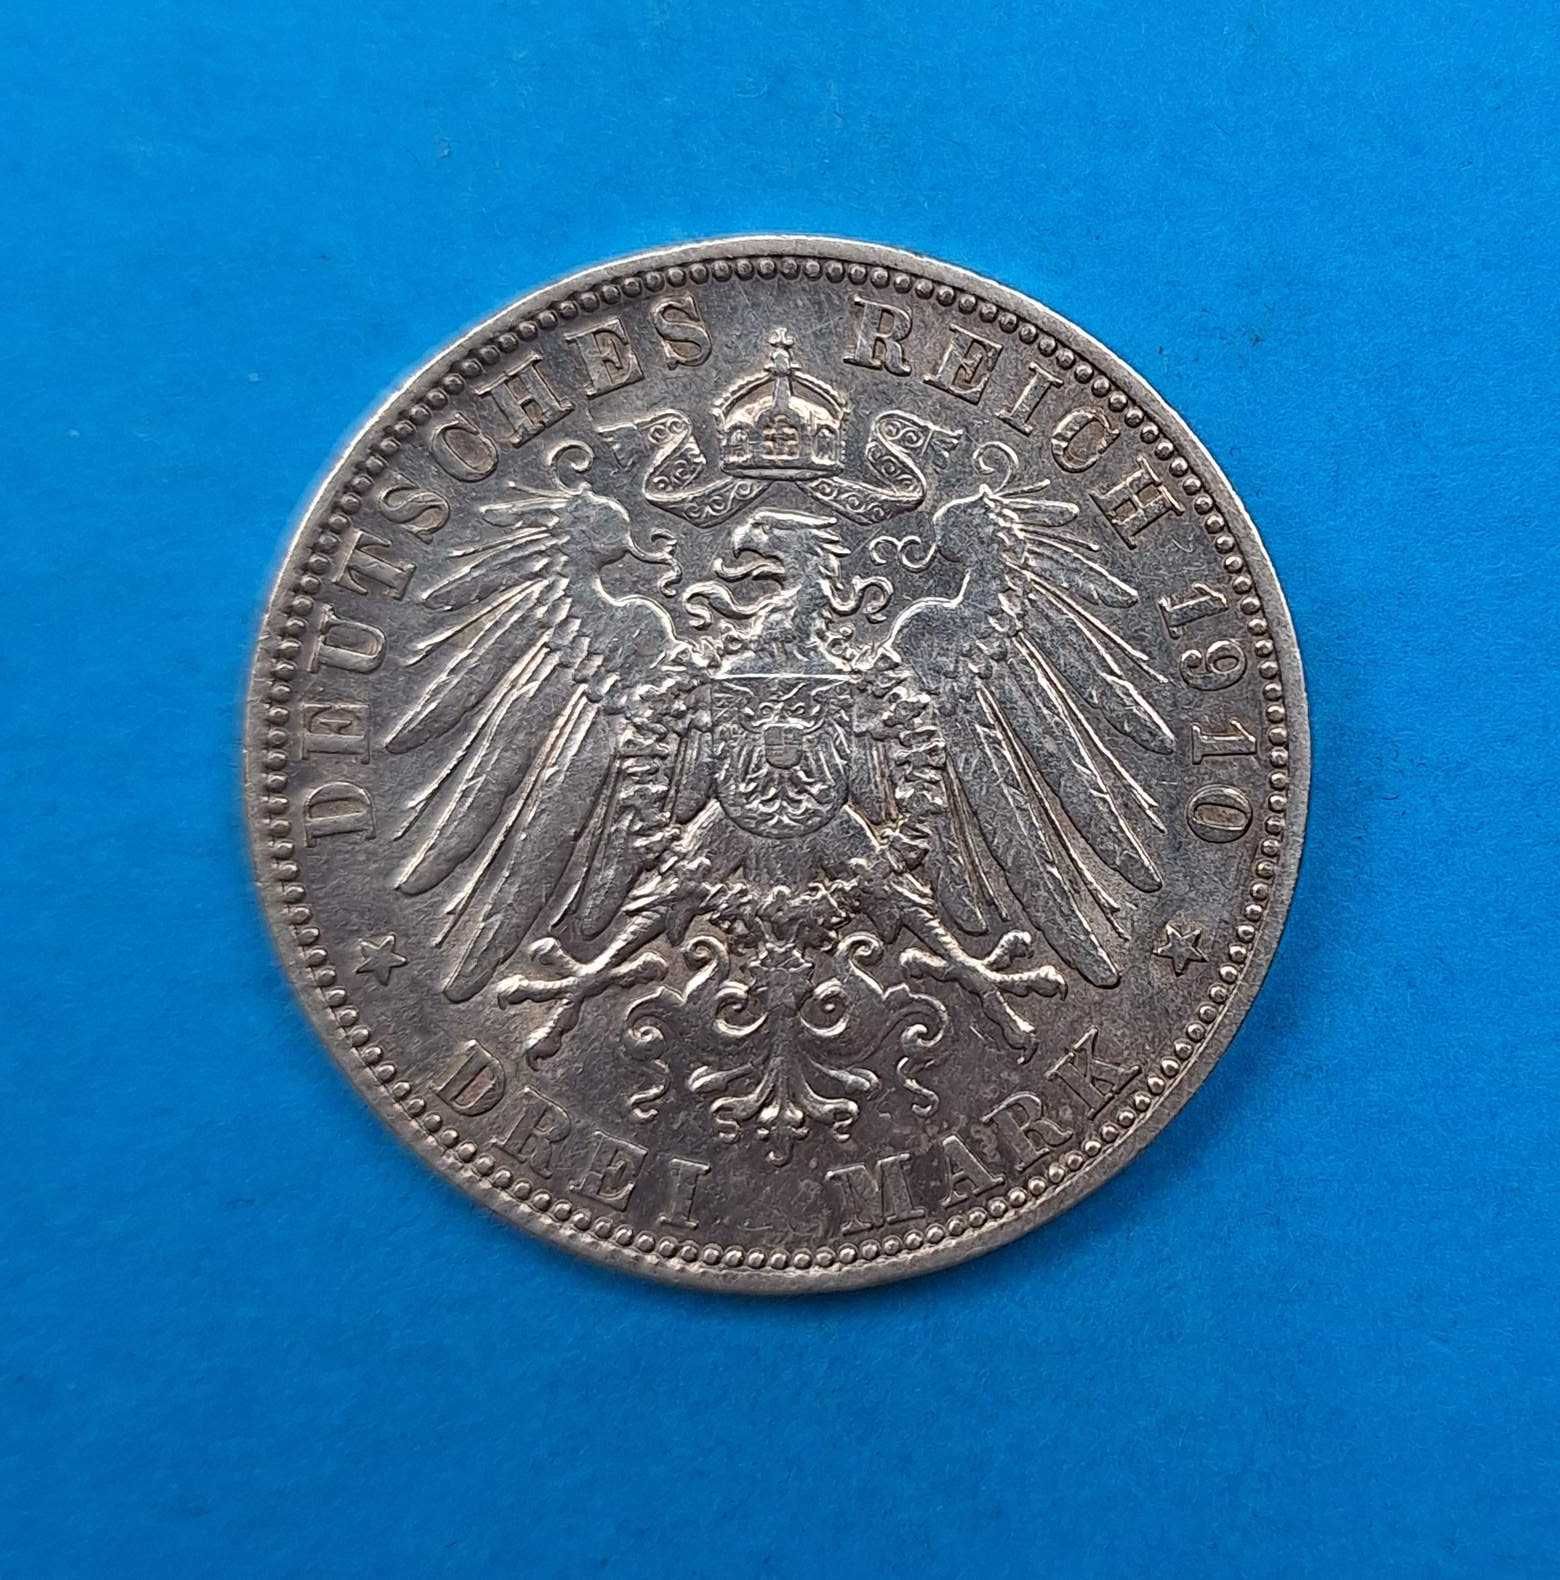 Niemcy Cesarstwo, Bawaria 3 marki 1910, Otto I, bdb stan, srebro 0,900